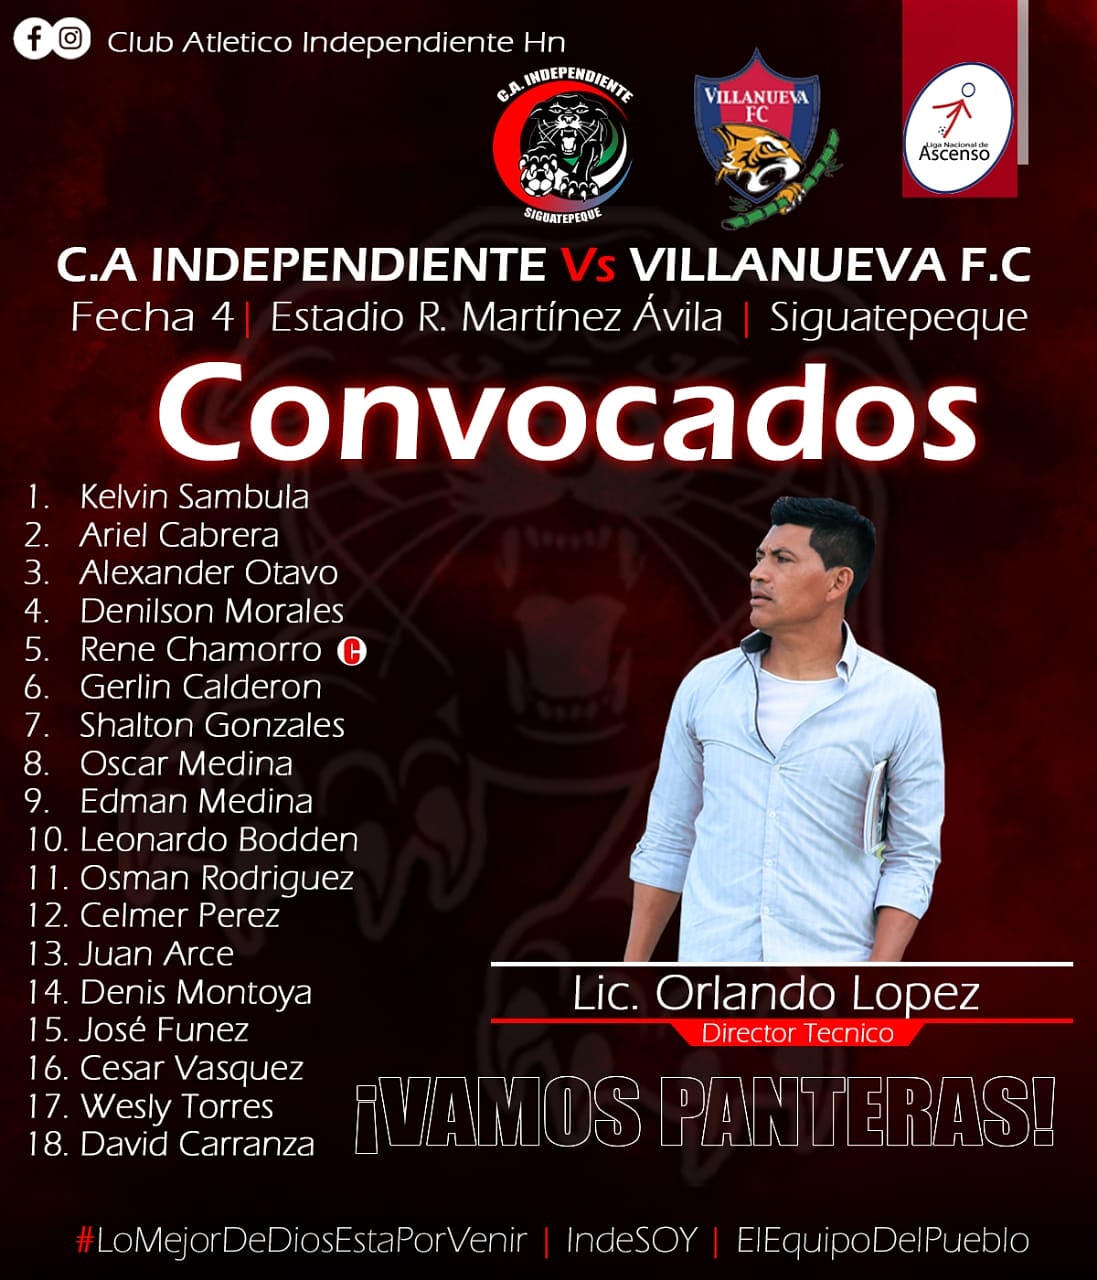 ATLETICO INDEPENDIENTE SIGUATEPEQUE on X: ¡Vamos Panteras! A. INDEPENDIENTE  🆚 LONE FC 🗓 Miércoles 17 - Marzo 🏟 Martínez Ávila 🏙 Siguatepeque 🕕  6:00 p.m #LoMejorDeDiosEstaPorVenir #IndeSOY #Siguatepeque   / X